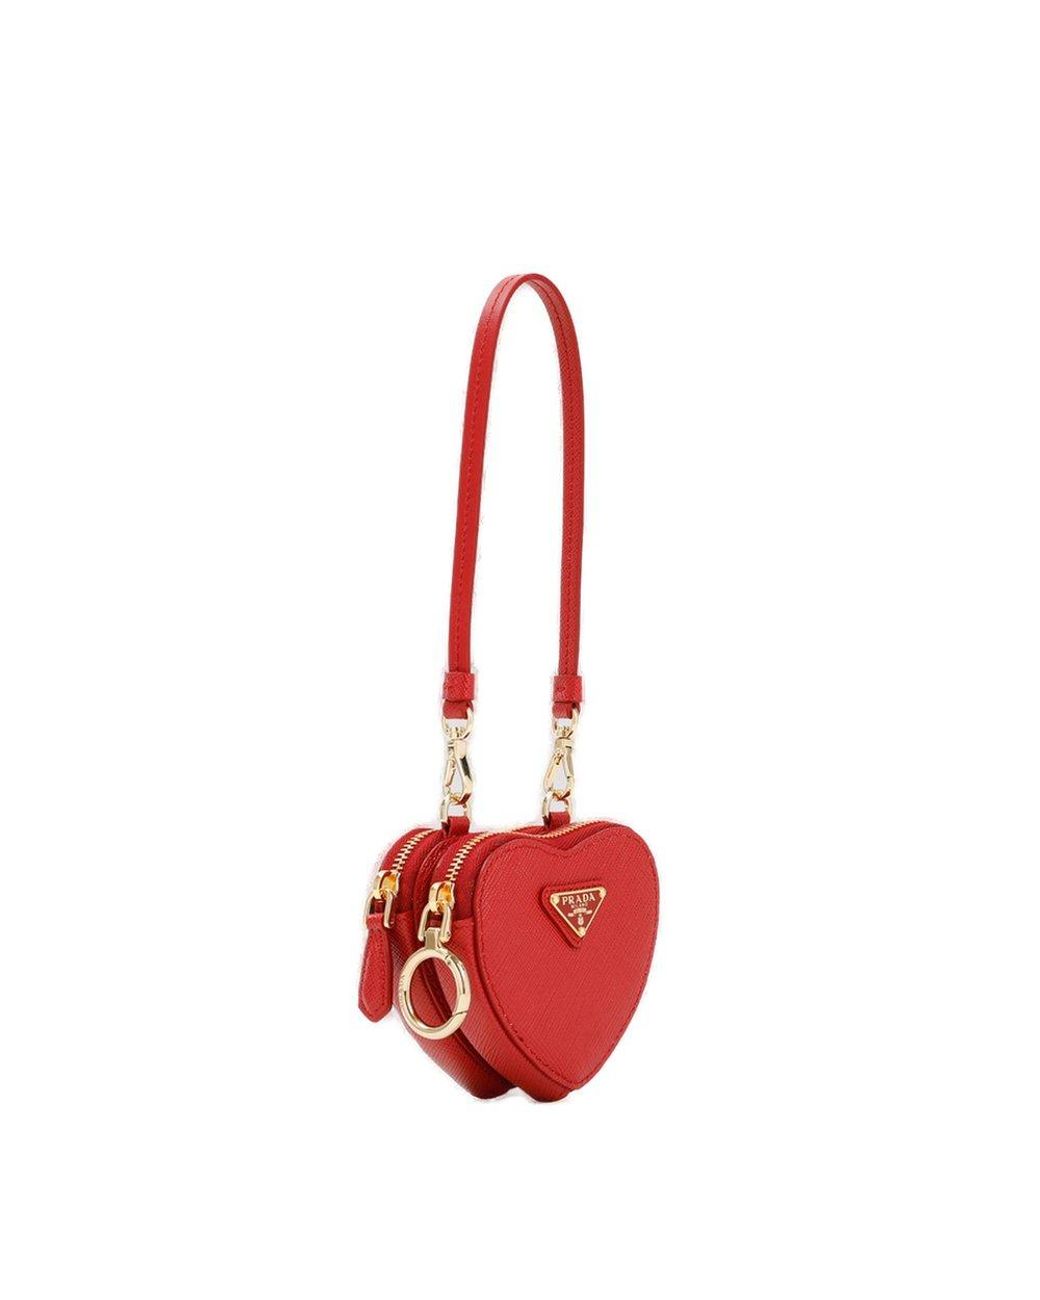 Prada Heart Saffiano Mini Shoulder Bag in Red